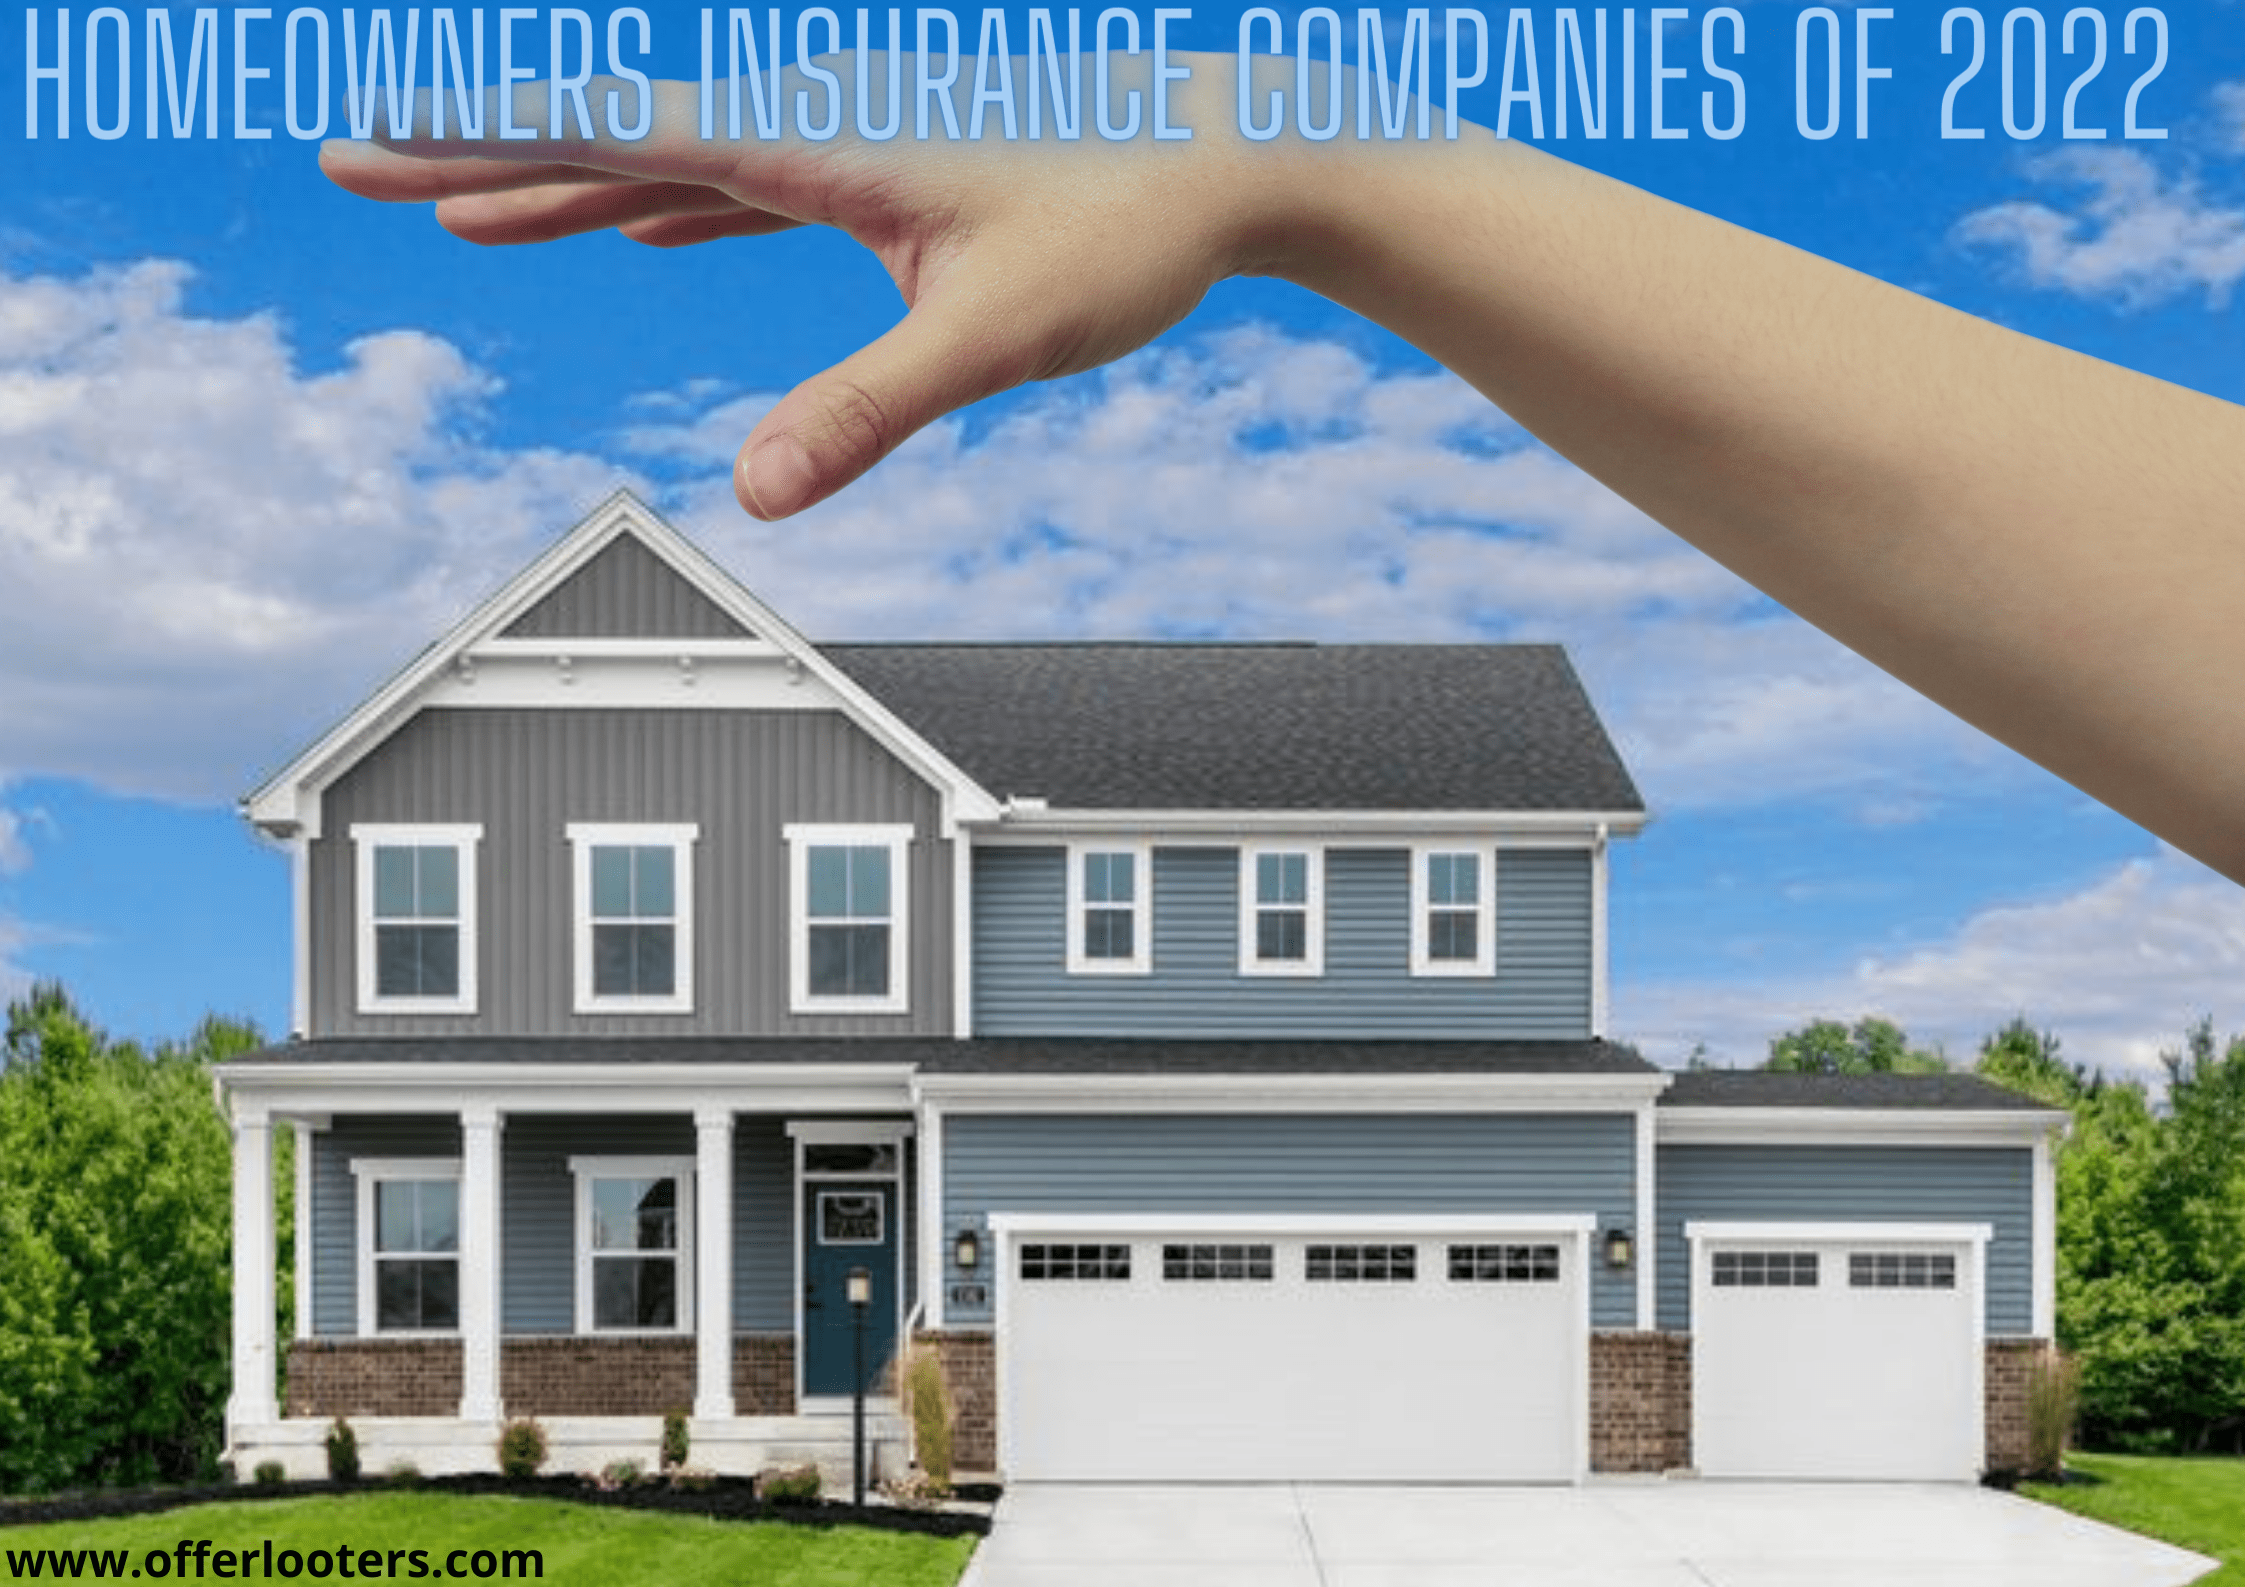 Homeowners Insurance Companies of 2022